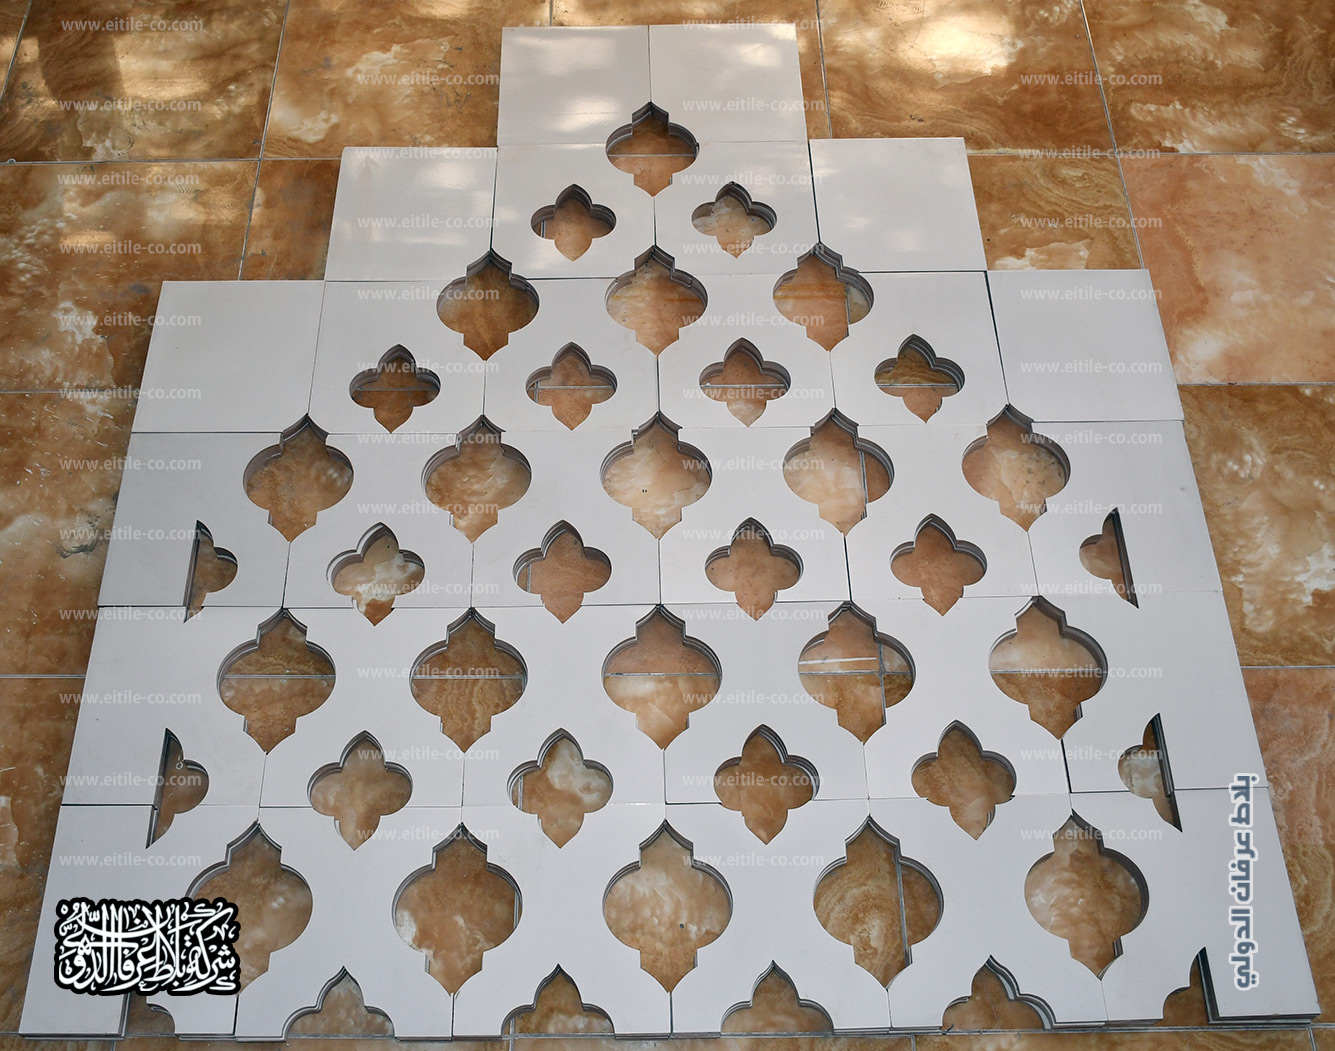 Screen ventilation tile supplier, www.eitile-co.com